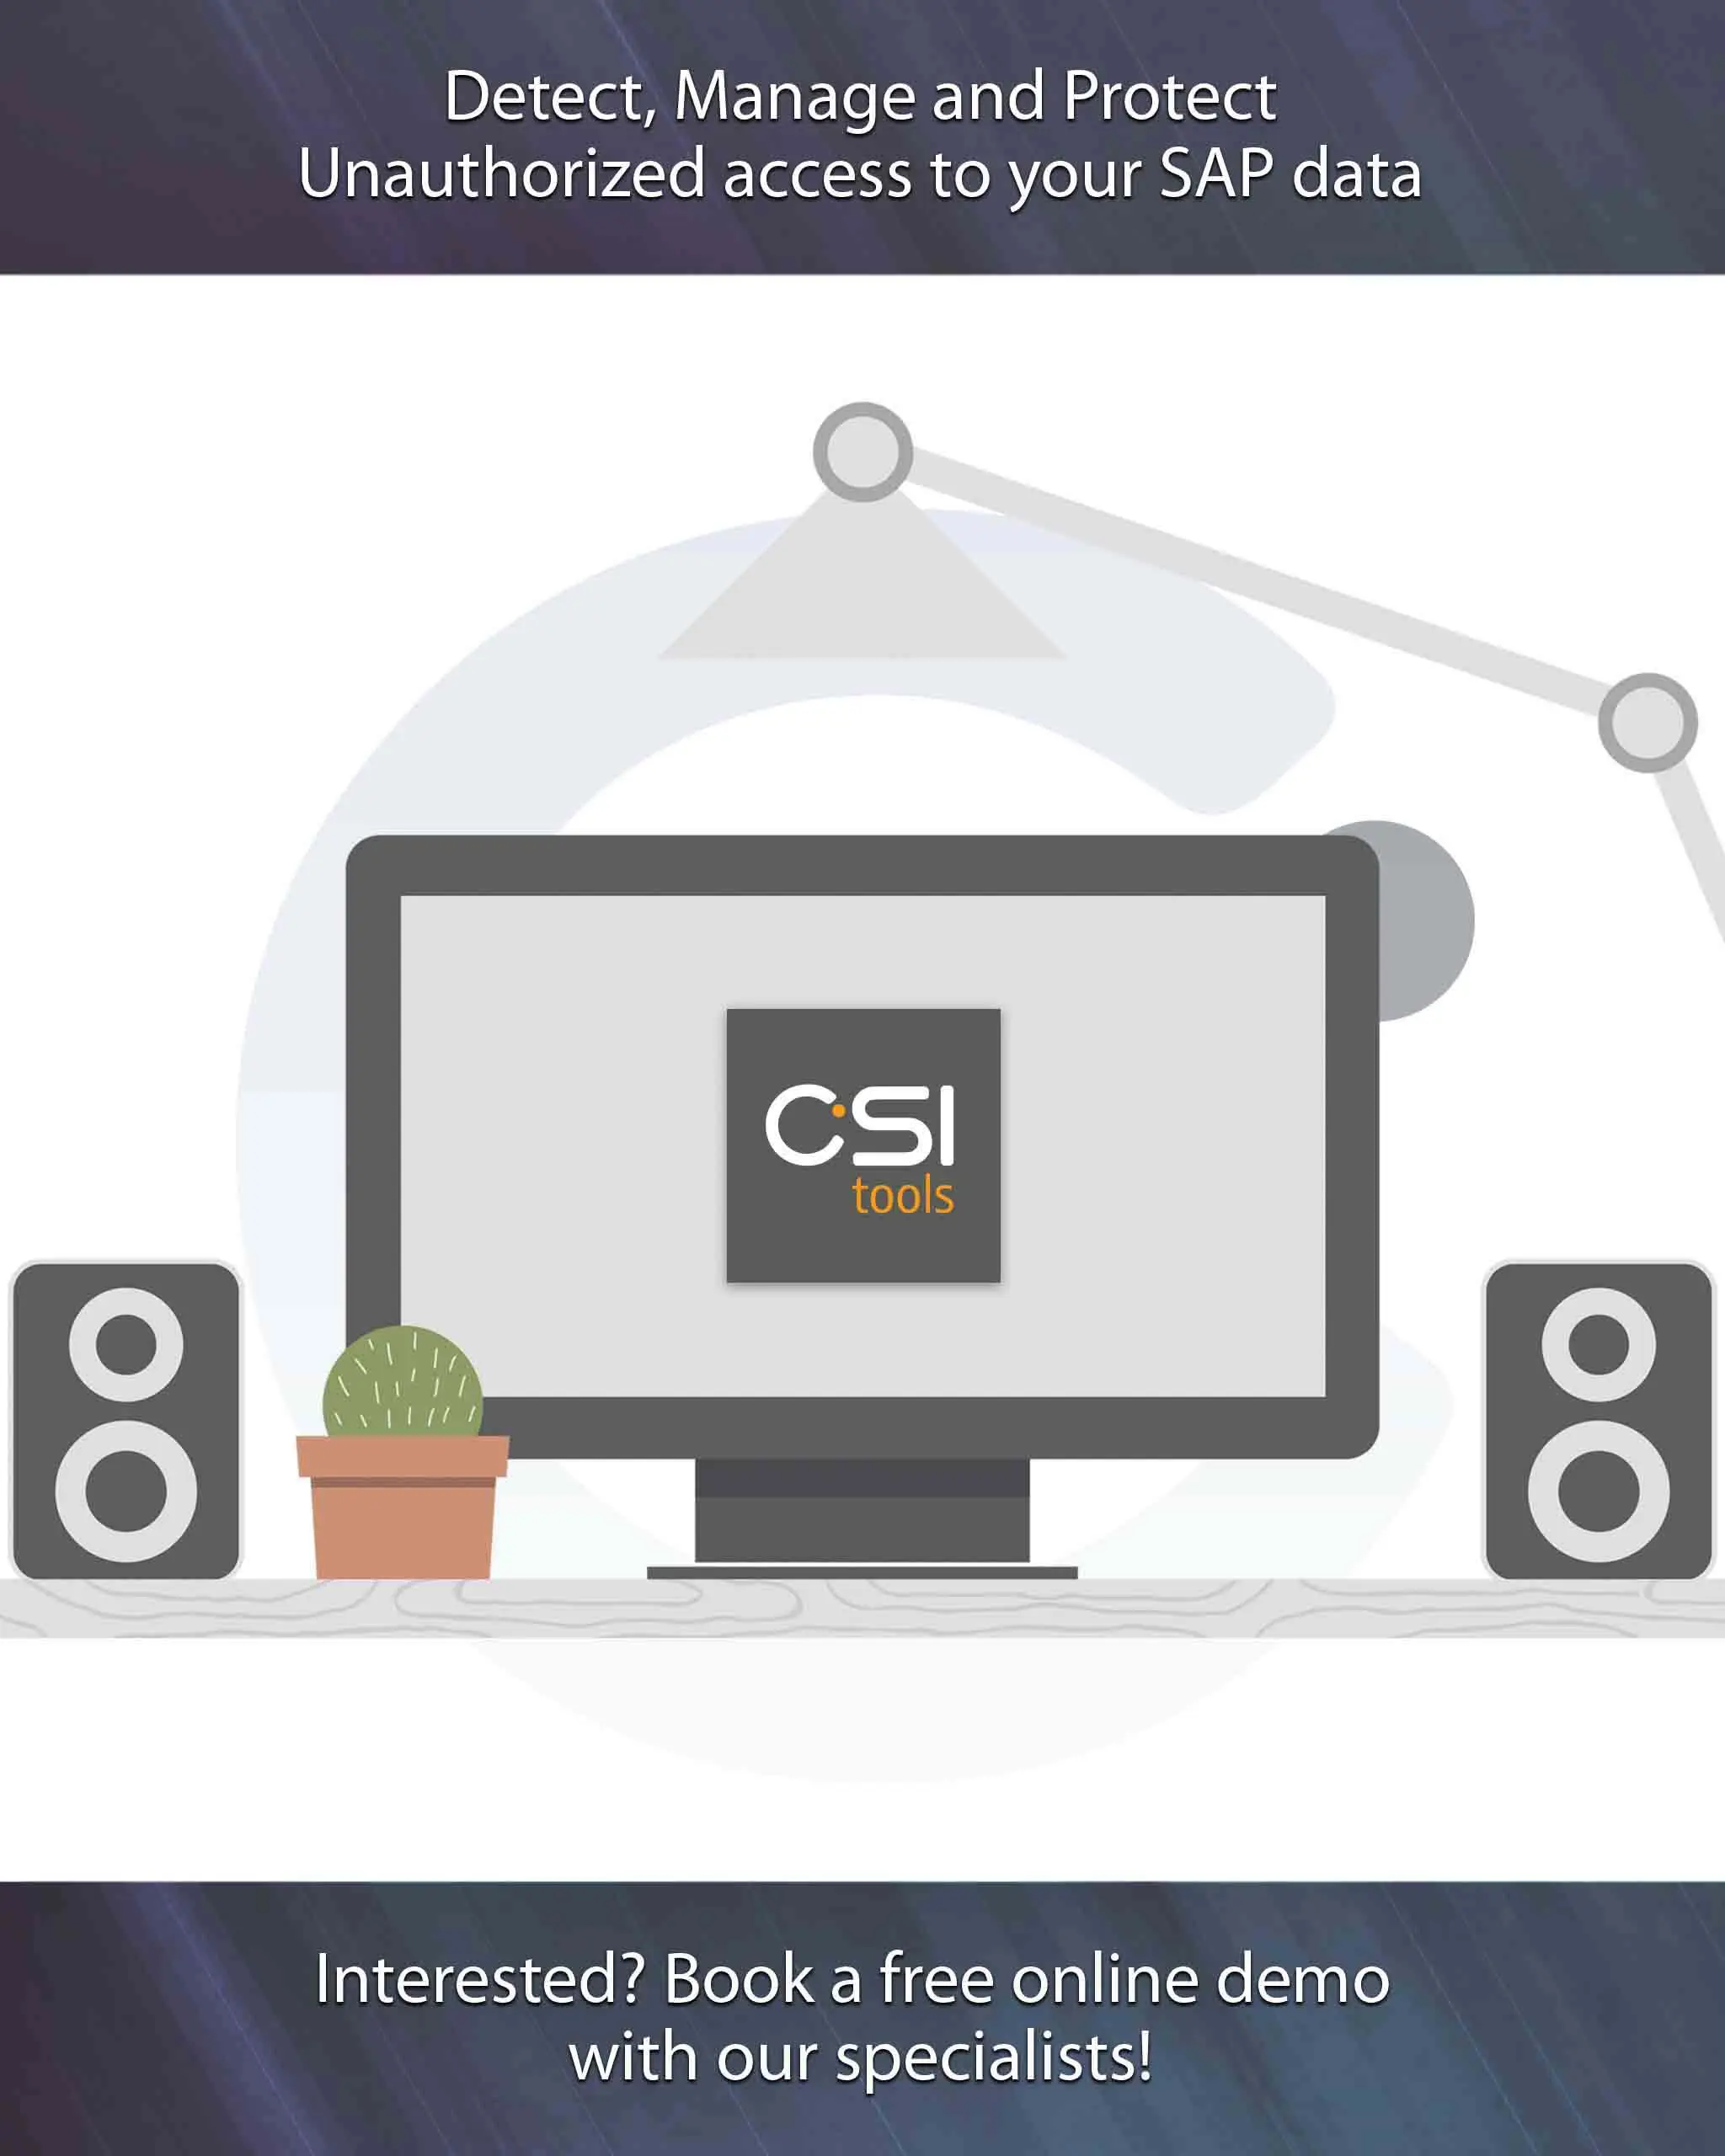 csi authorization auditor - What is CSI in auditing